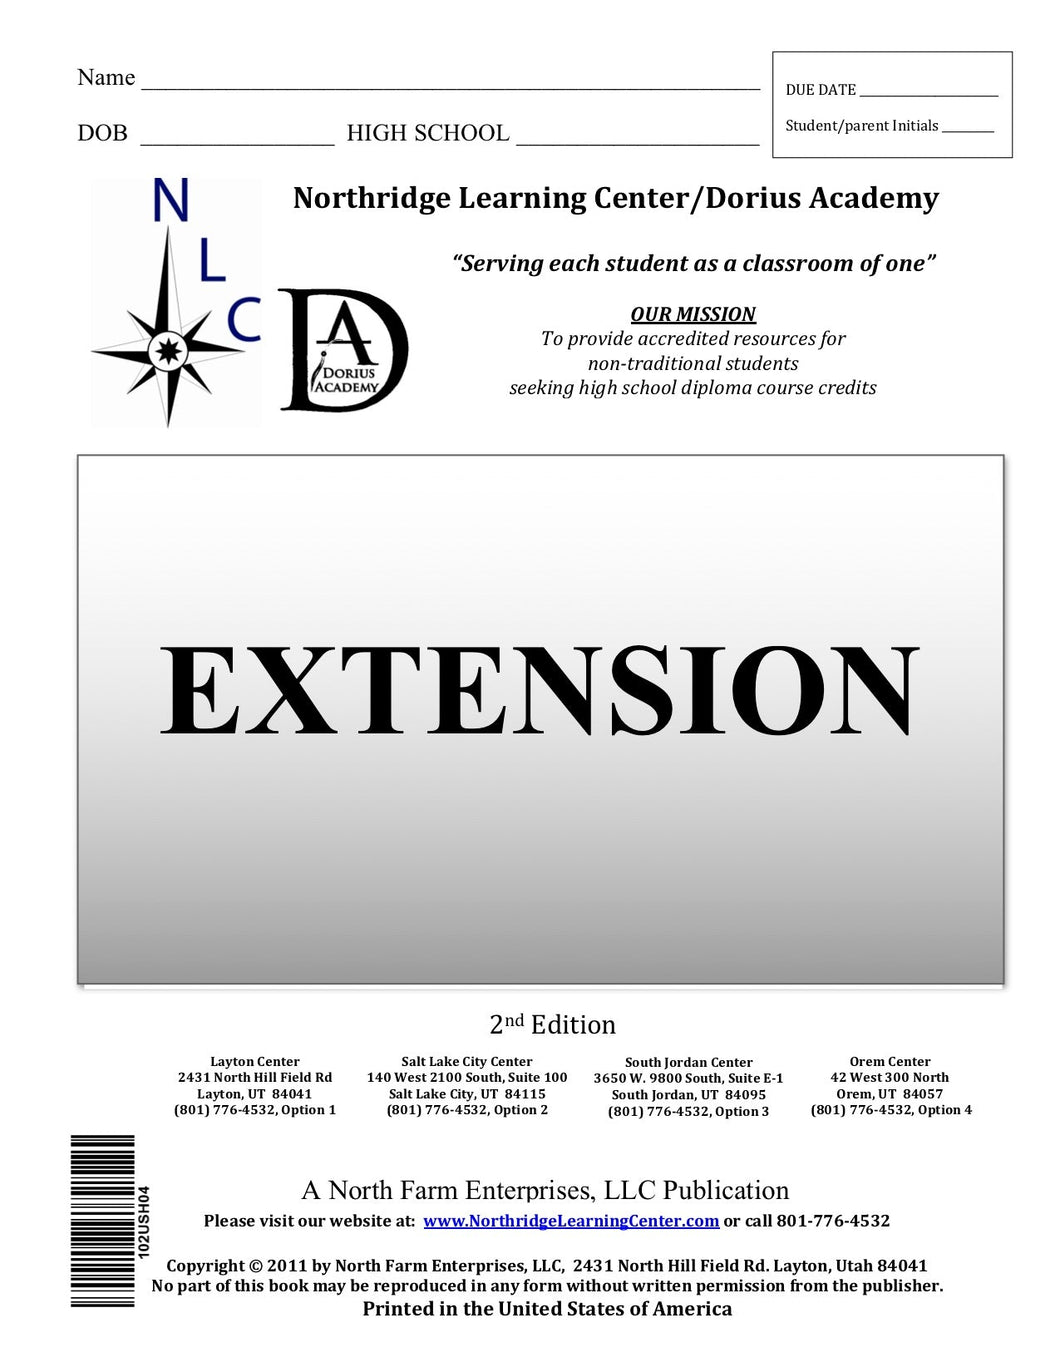 Algebra II, Section II - Extension